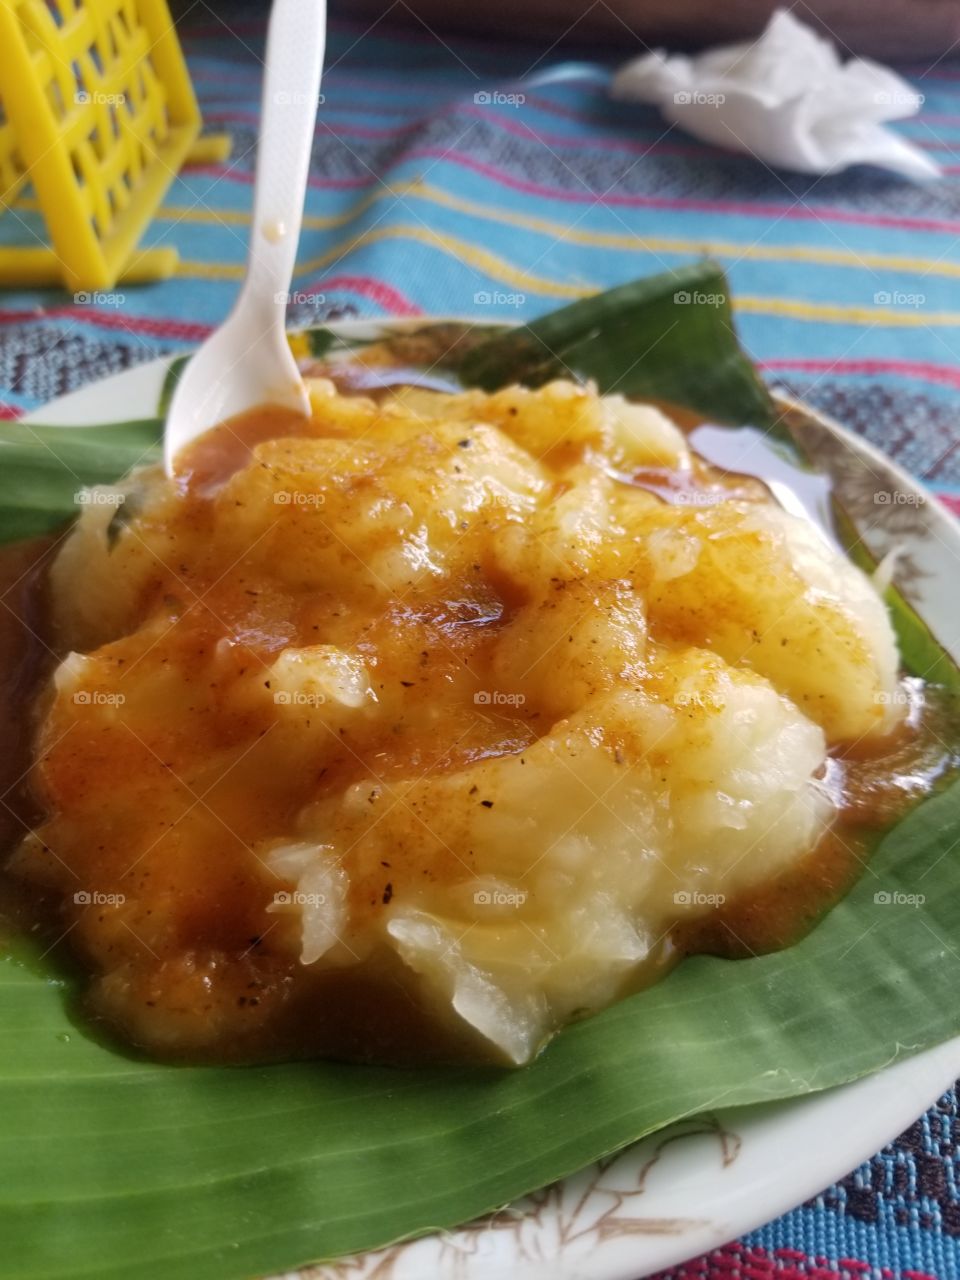 Salvadoran Yucca root cuisine